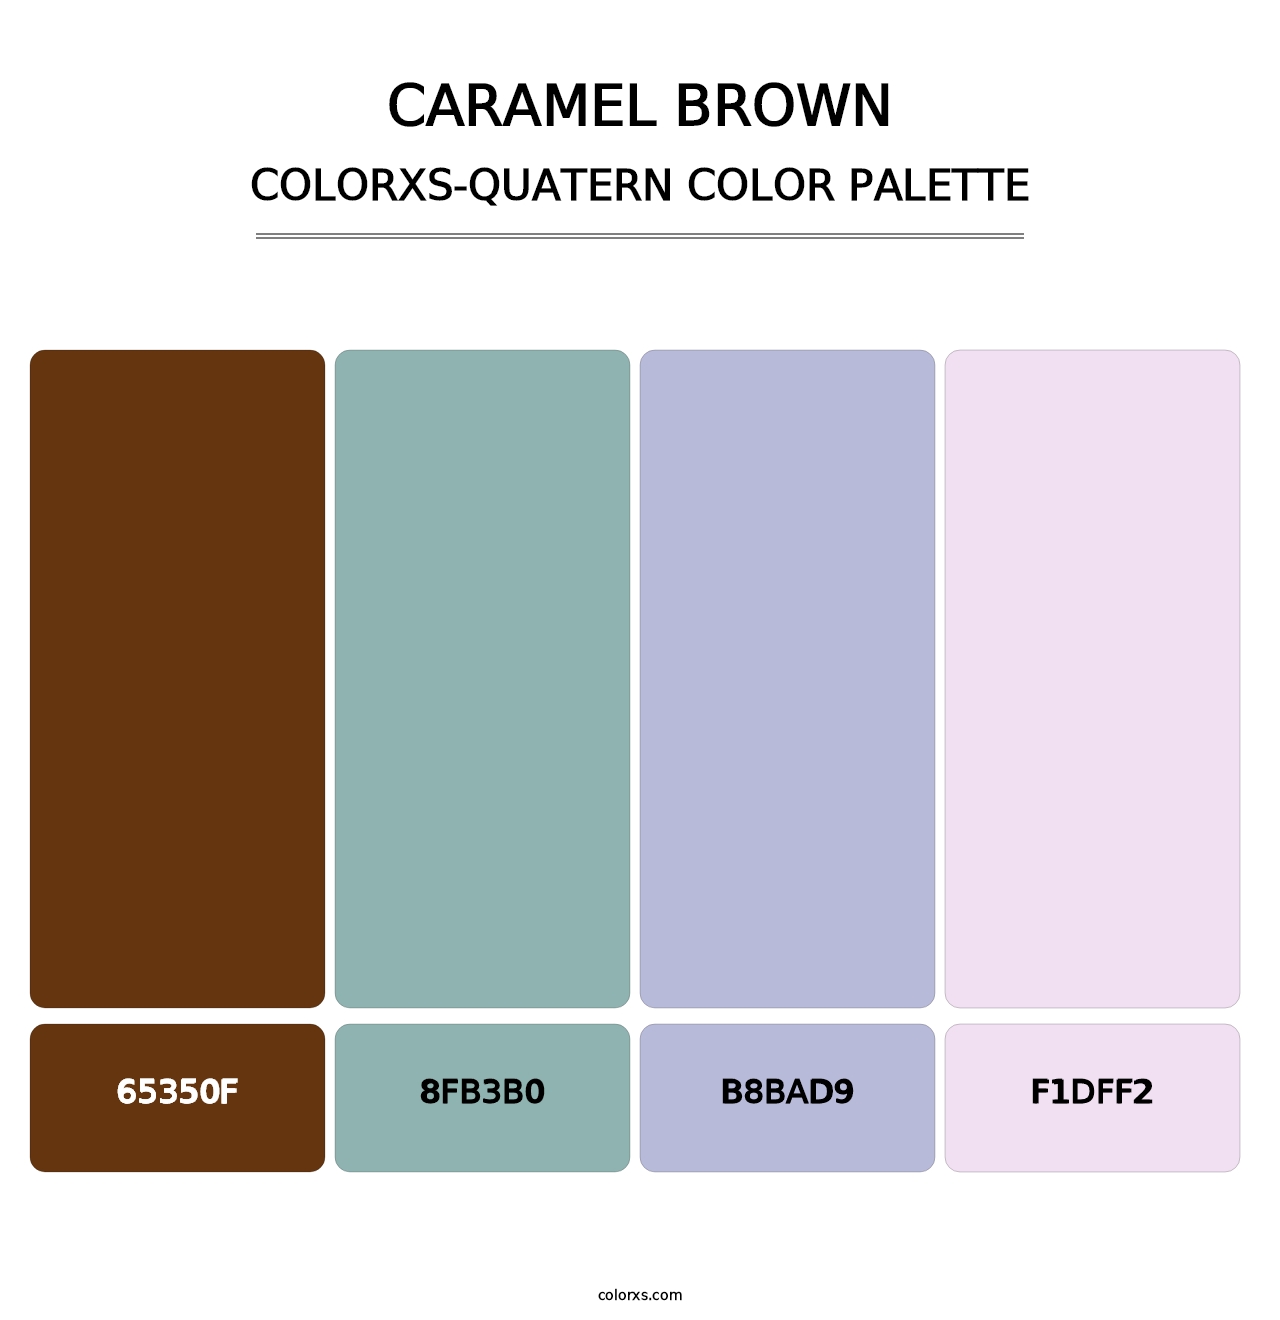 Caramel Brown - Colorxs Quatern Palette